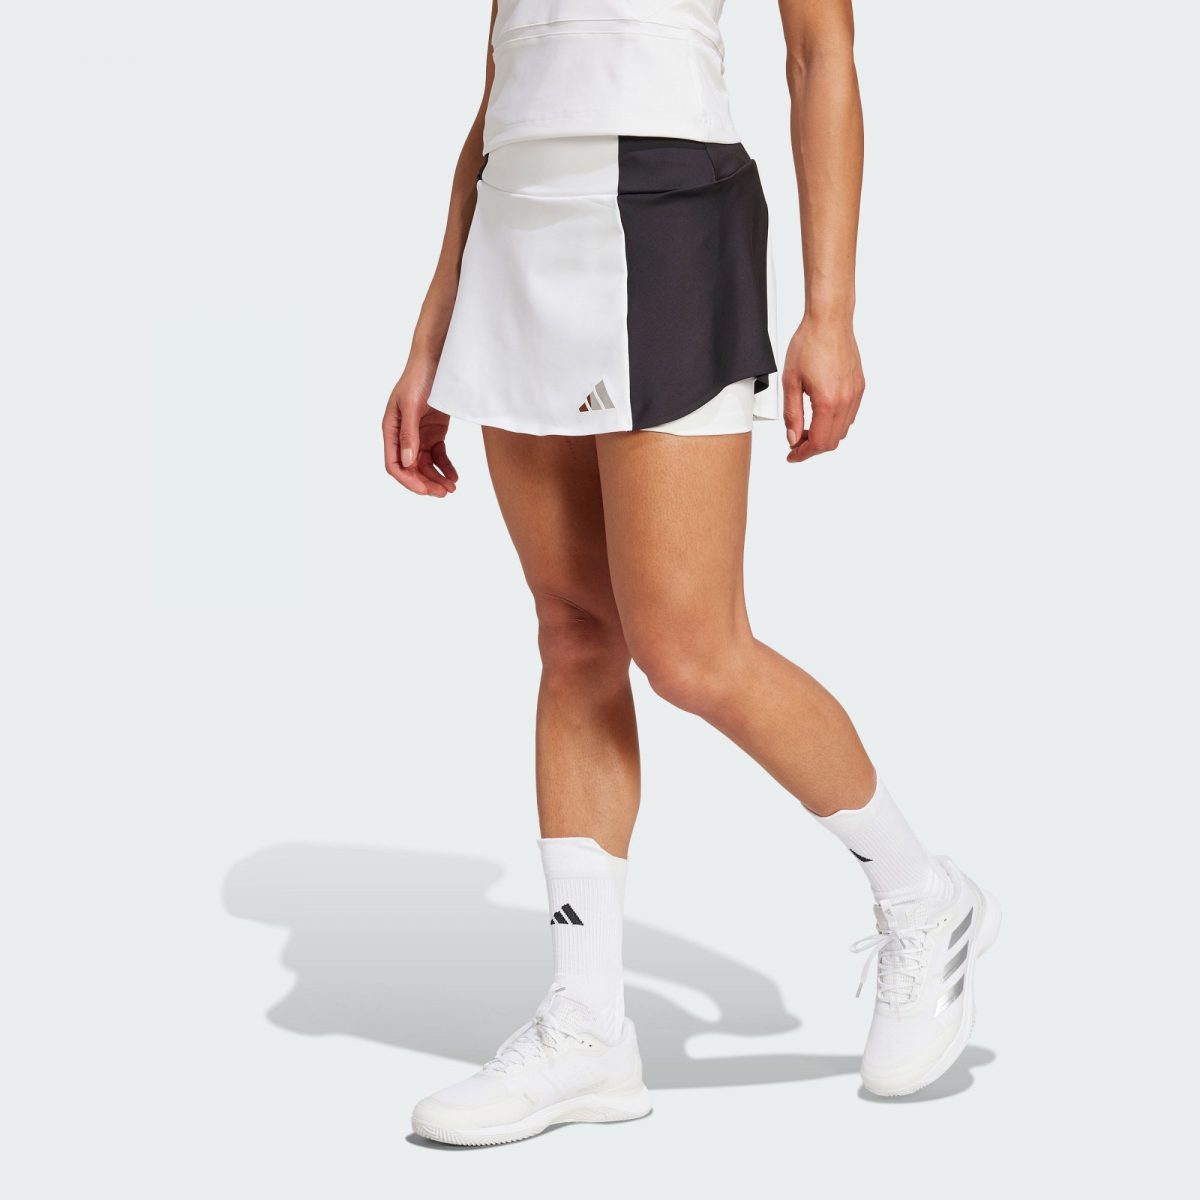 Женская юбка adidas TENNIS PREMIUM SKIRT фото